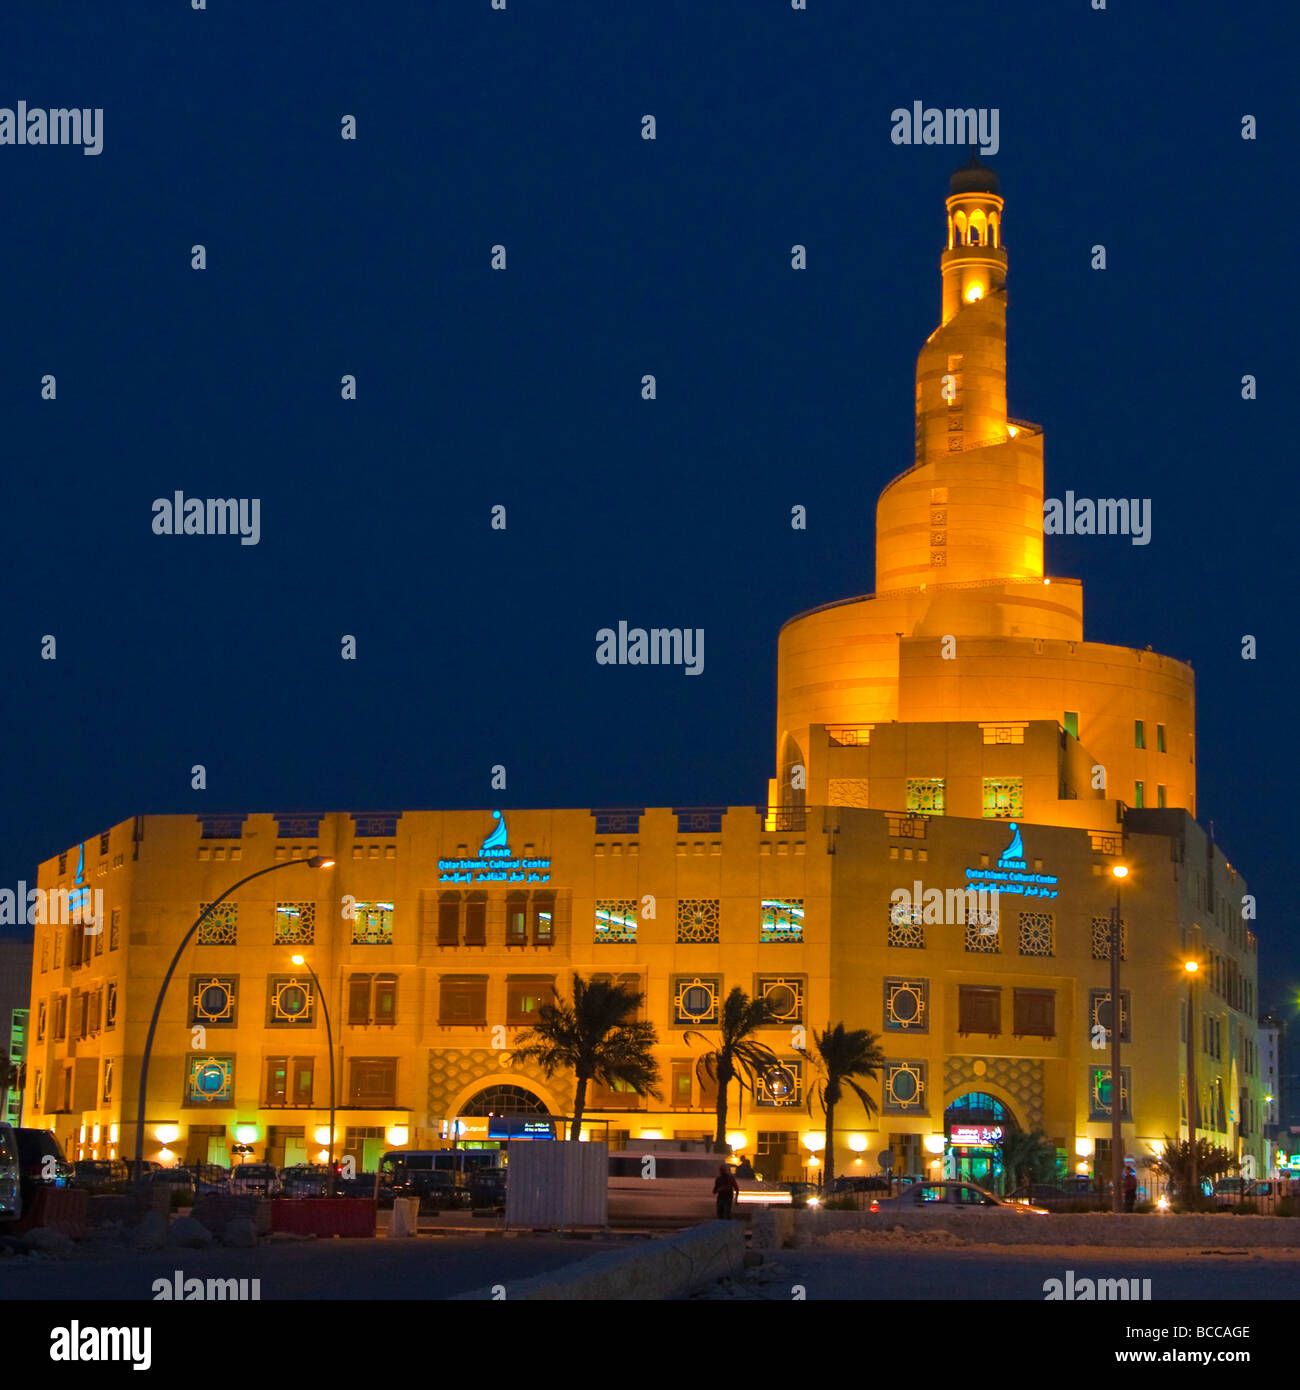 Doha in Qatar. Kassem Darwish Fakhroo Center, sede del Qatar centro culturale islamico. Scena notturna. Foto Stock